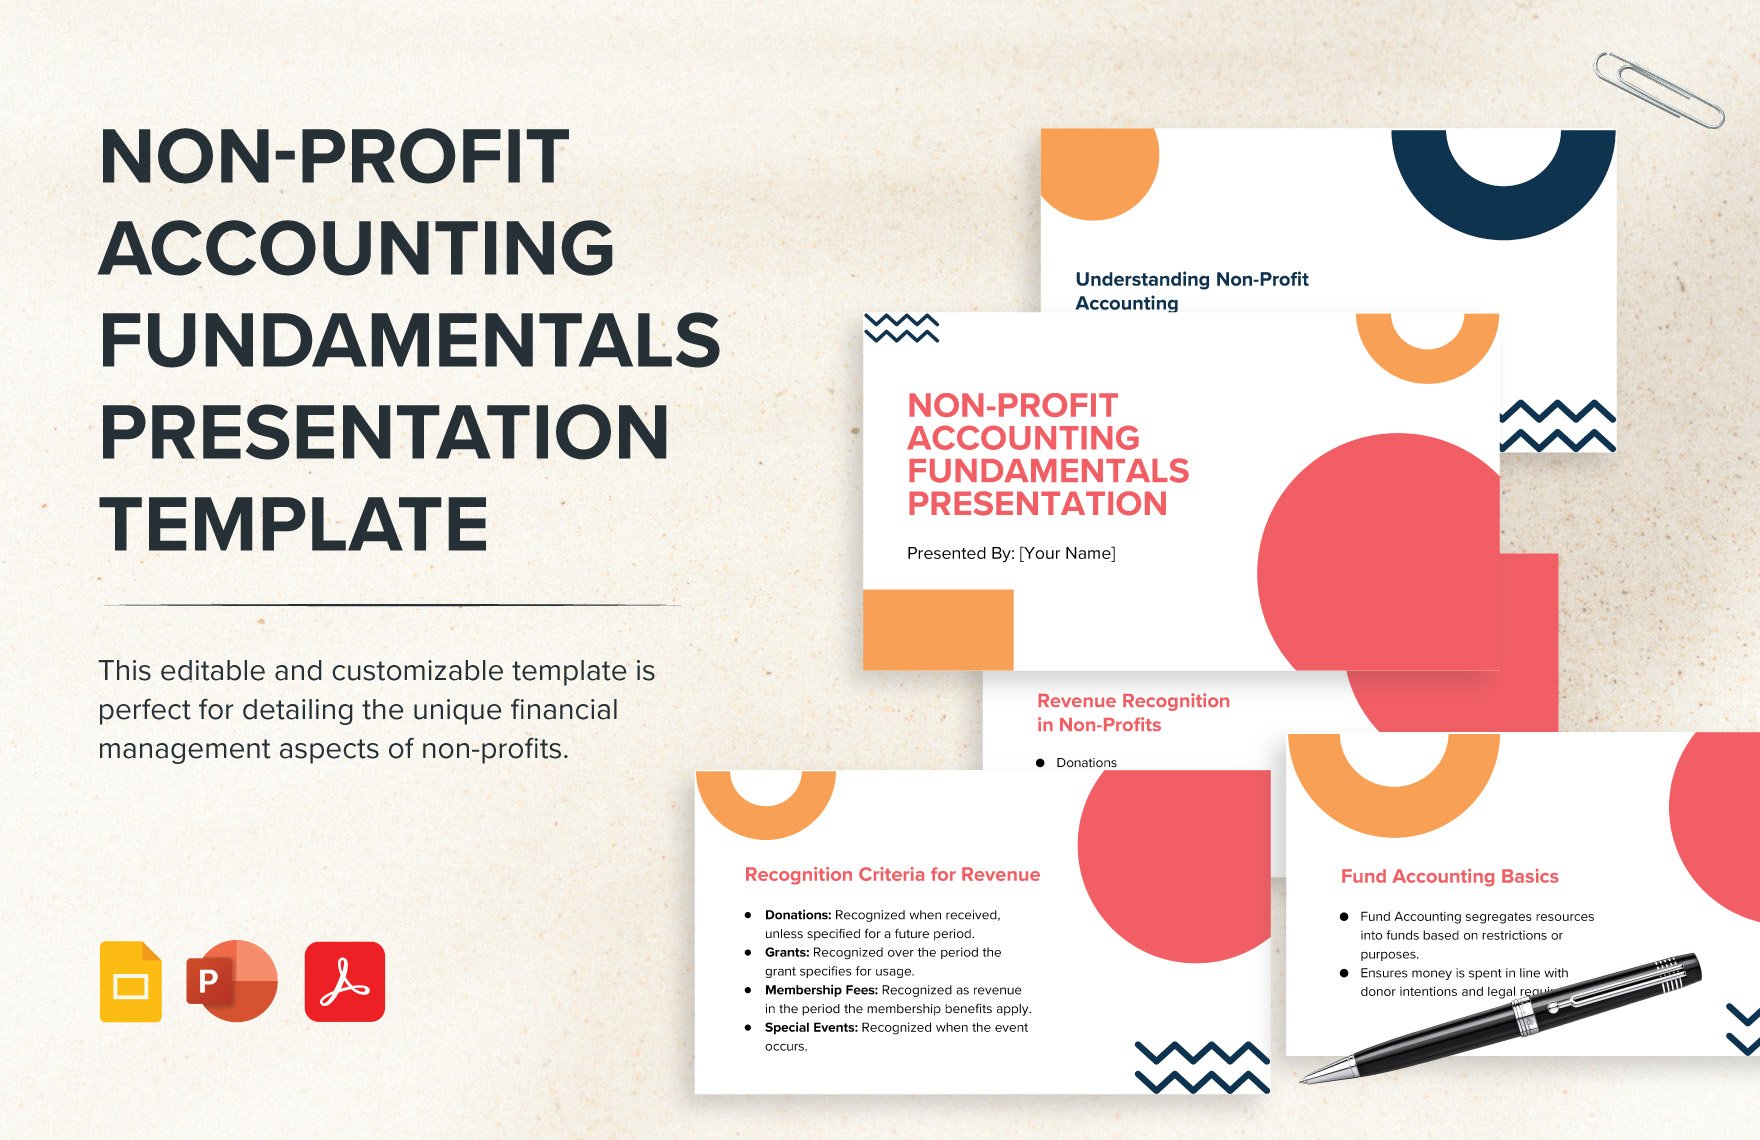 Non-Profit Accounting Fundamentals Presentation Template